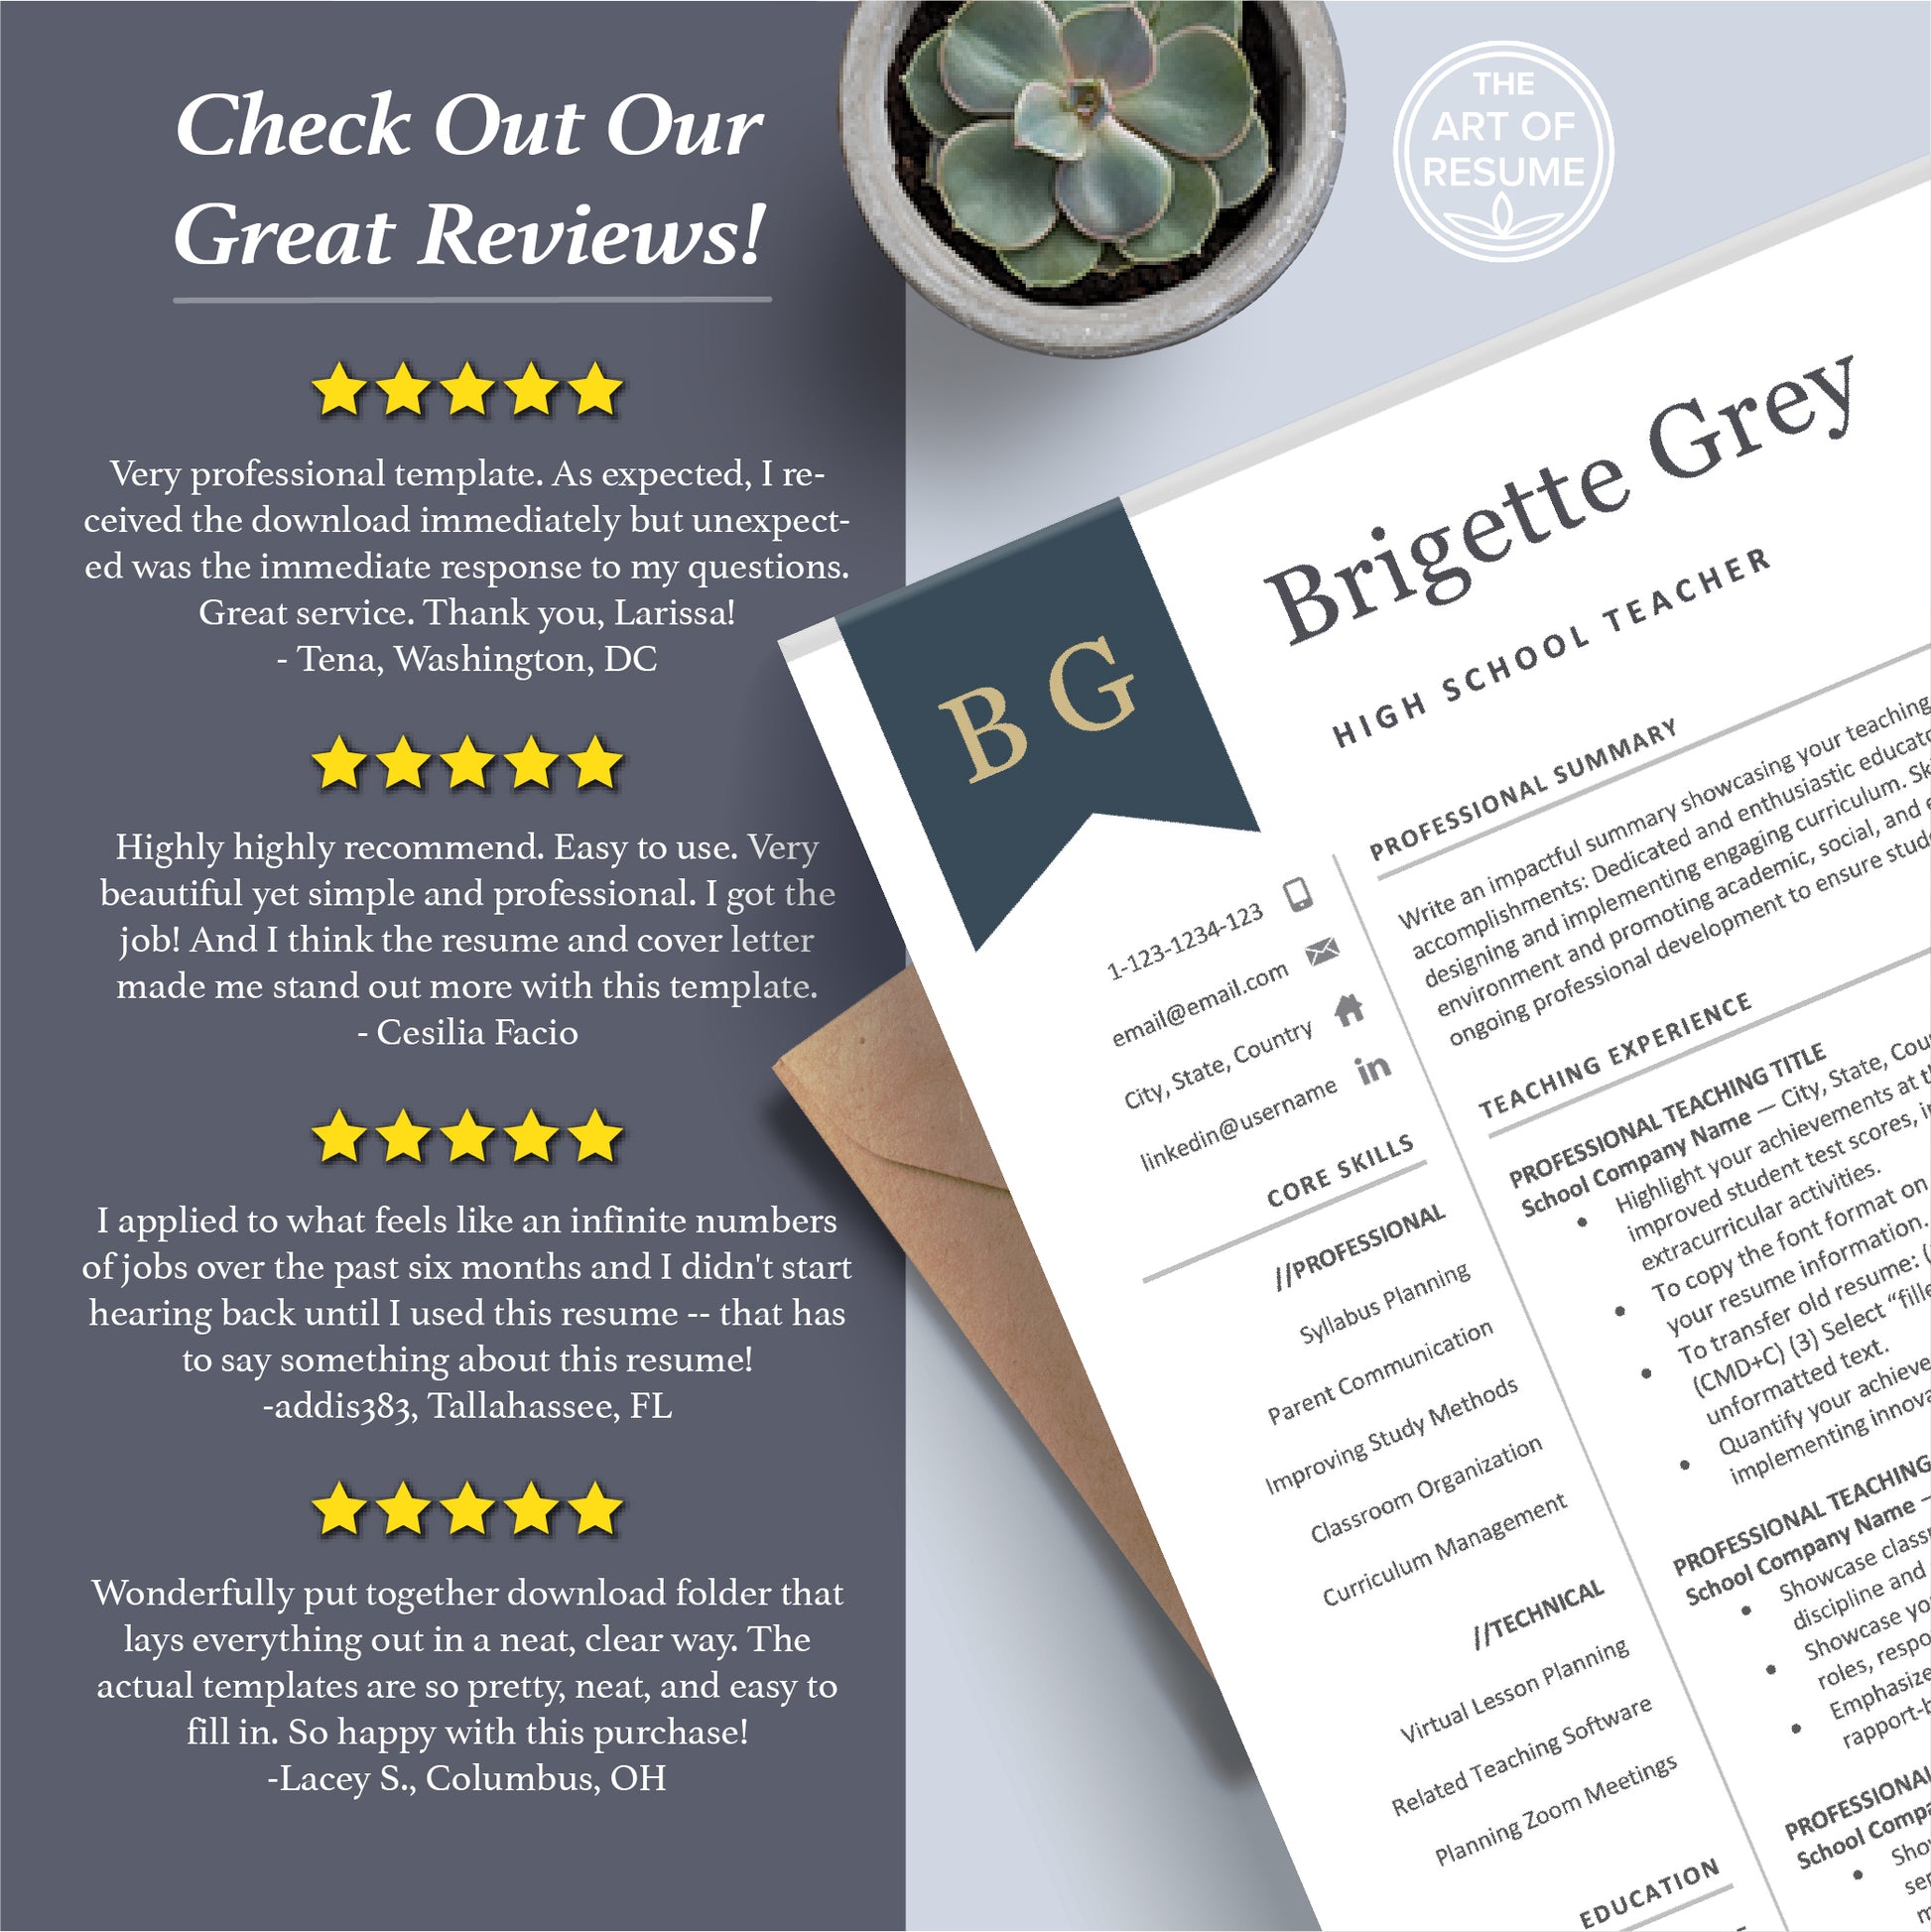 The Art of Resume Professional Navy Blue Teacher Resume Template Bundle | Best 5-Star Resume Template Reviews Online